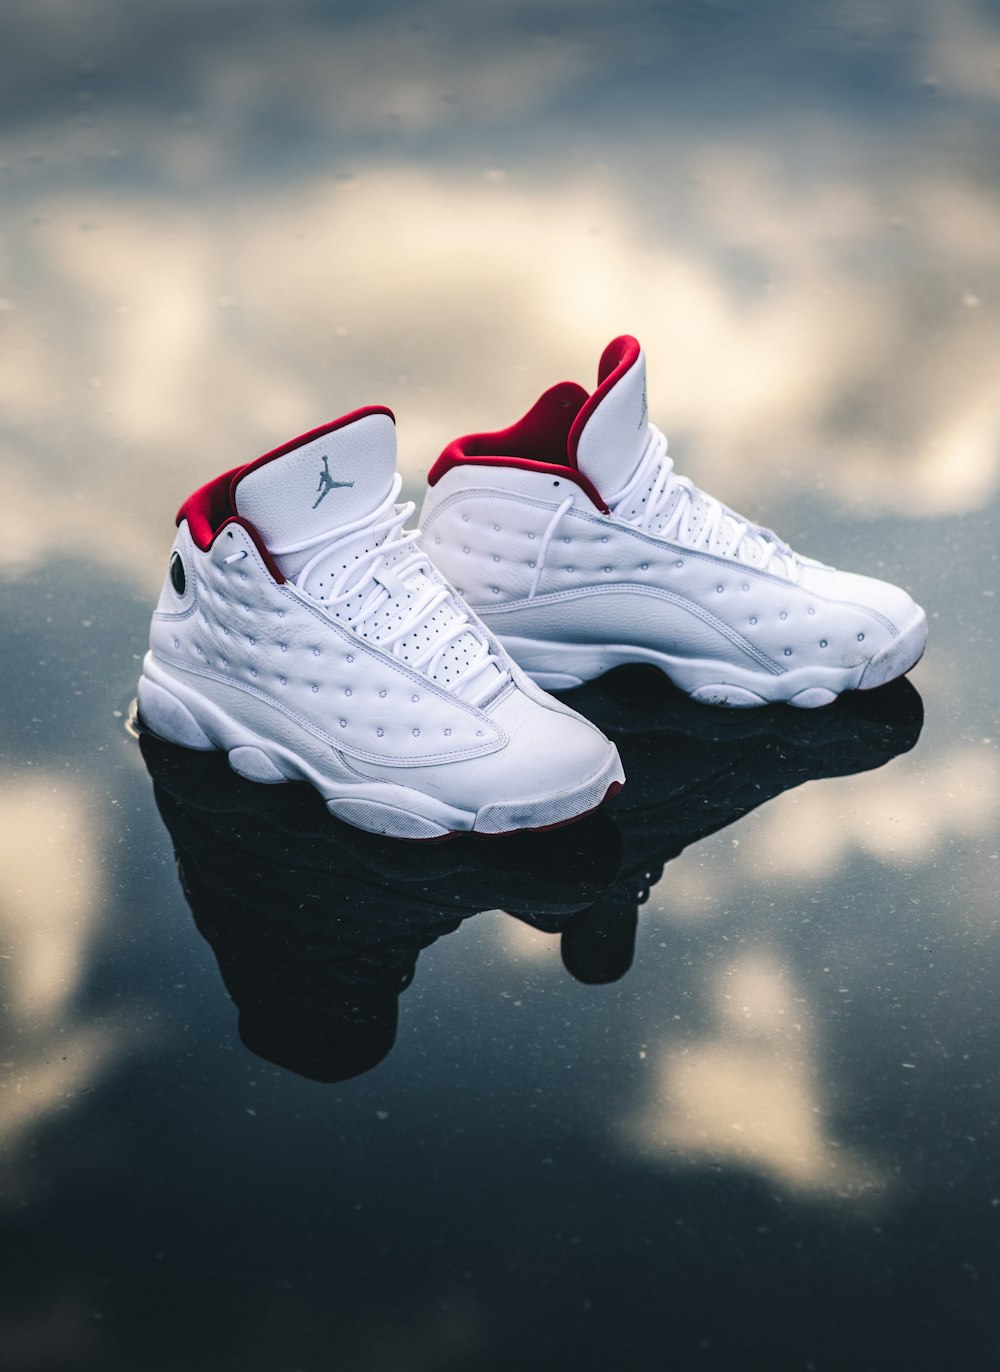 White-and-red Air Jordan 13's photo – Free Footwear Image on Unsplash